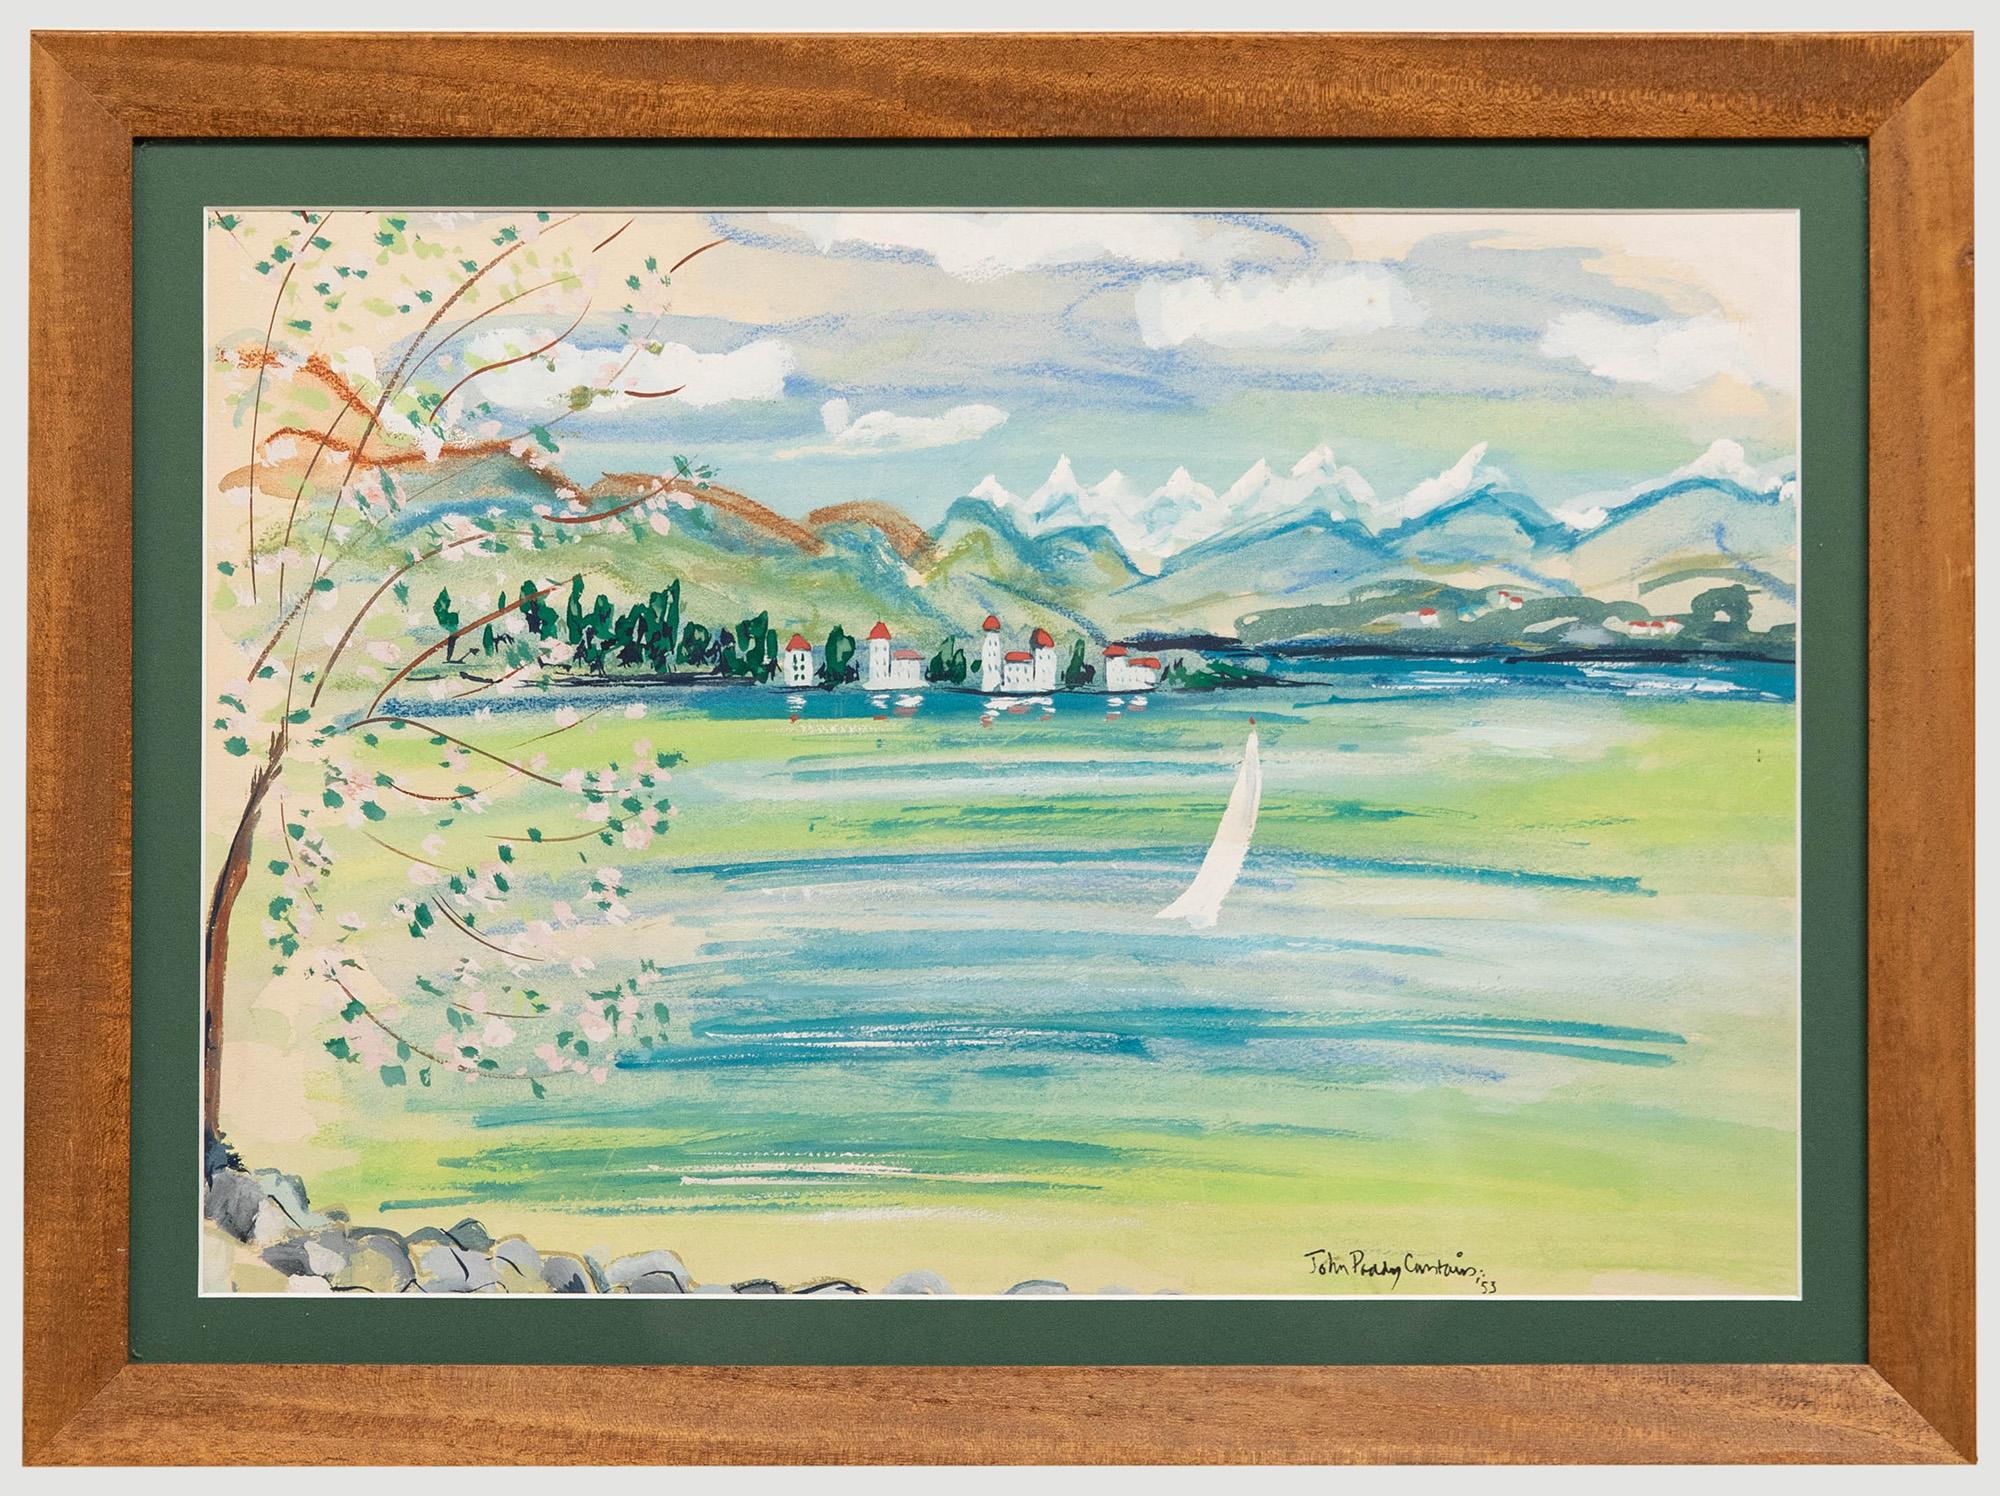 Unknown Landscape Art – John Paddy Carstairs (1916-1970) - Gouache, Seeszene mit weißem Segelboot